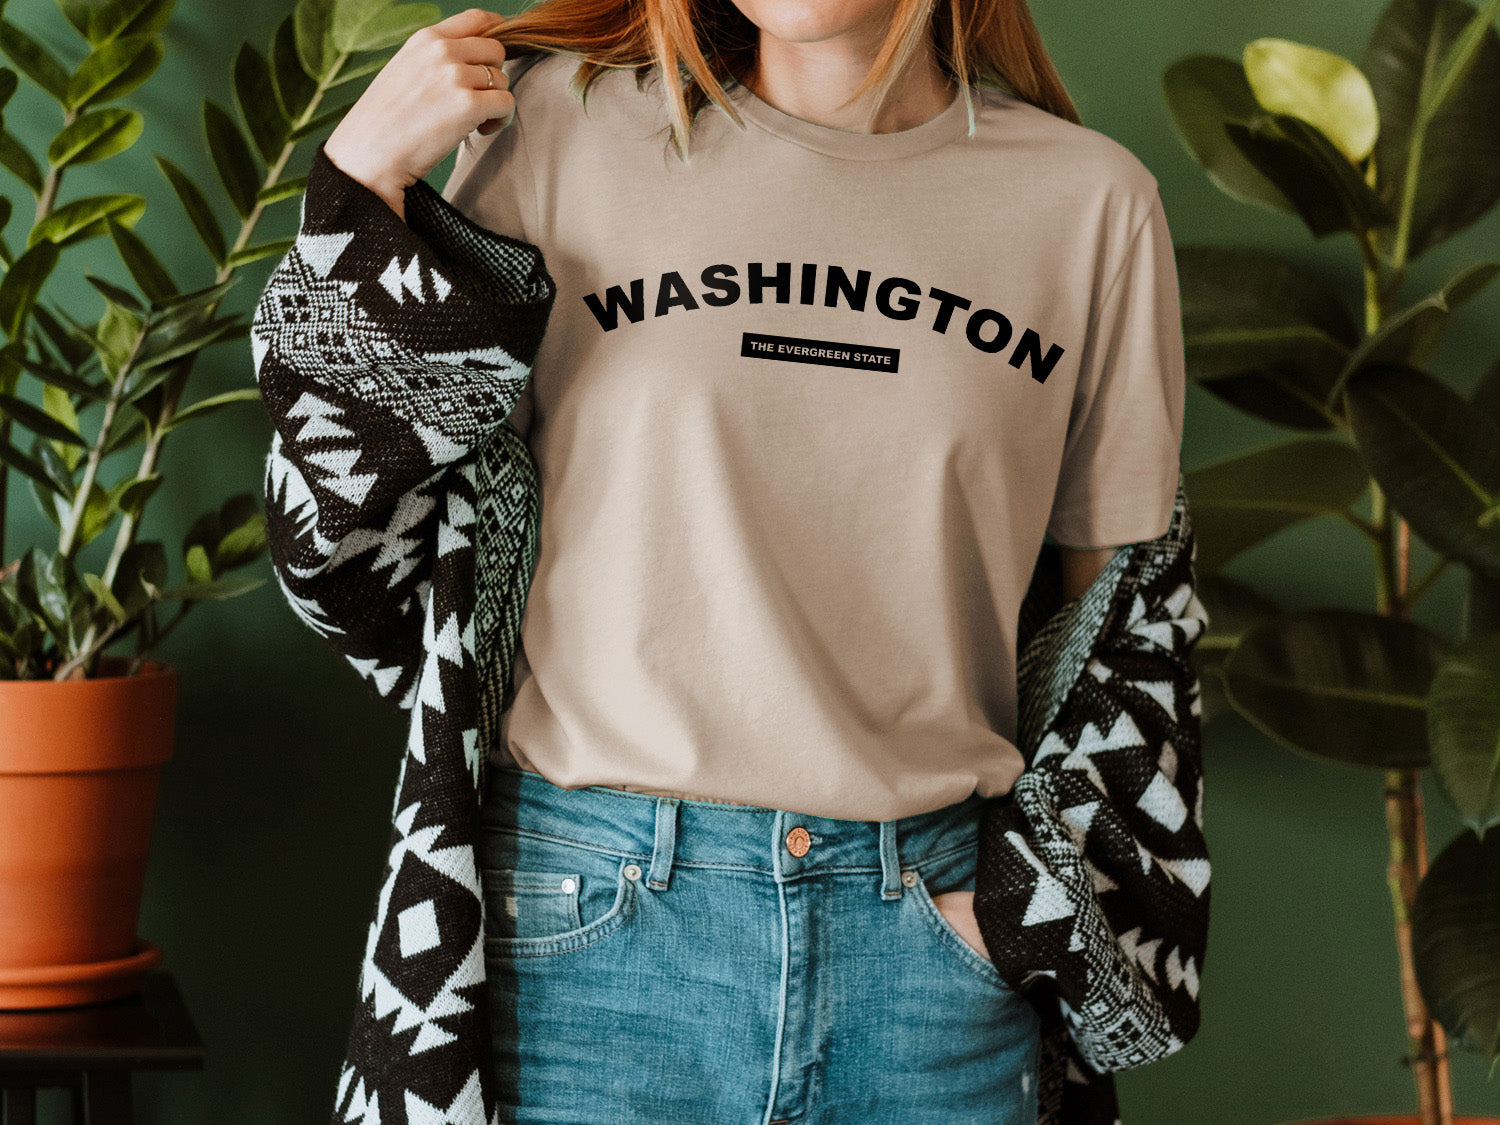 Washington The Evergreen State T-shirt - United States Name & Slogan Minimal Design Printed Tee Shirt